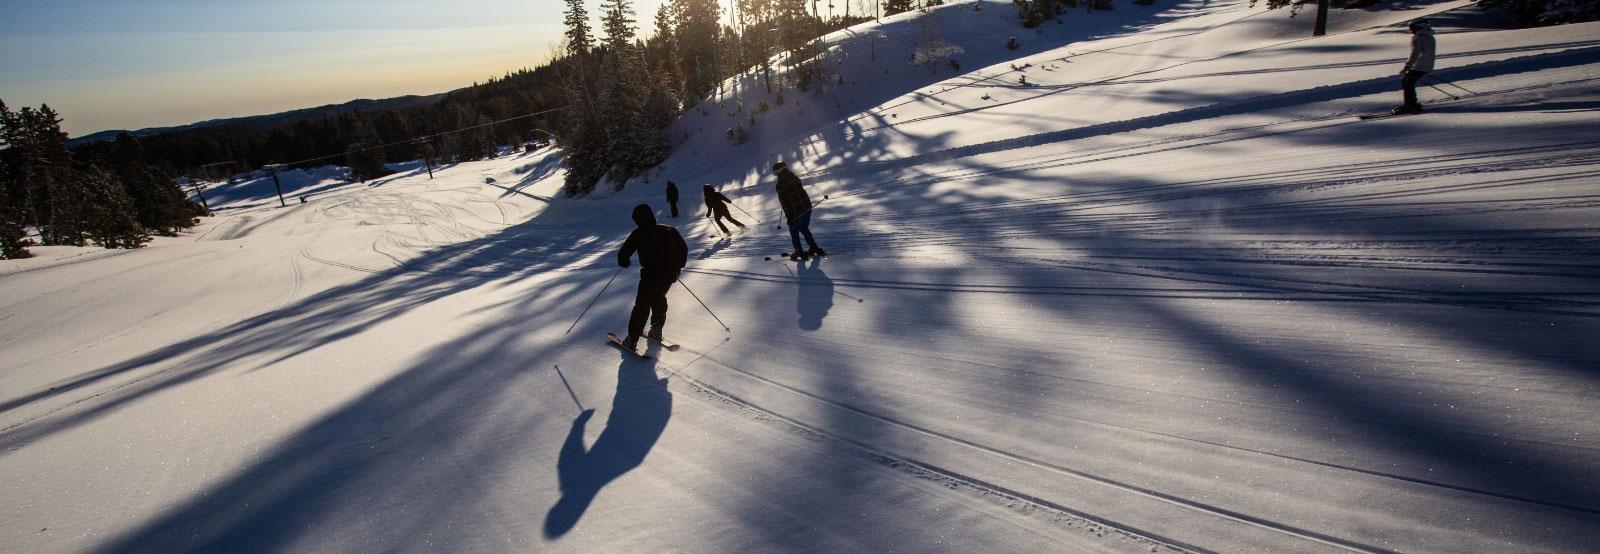 Deer Mountain Snow Skiing Action Photo